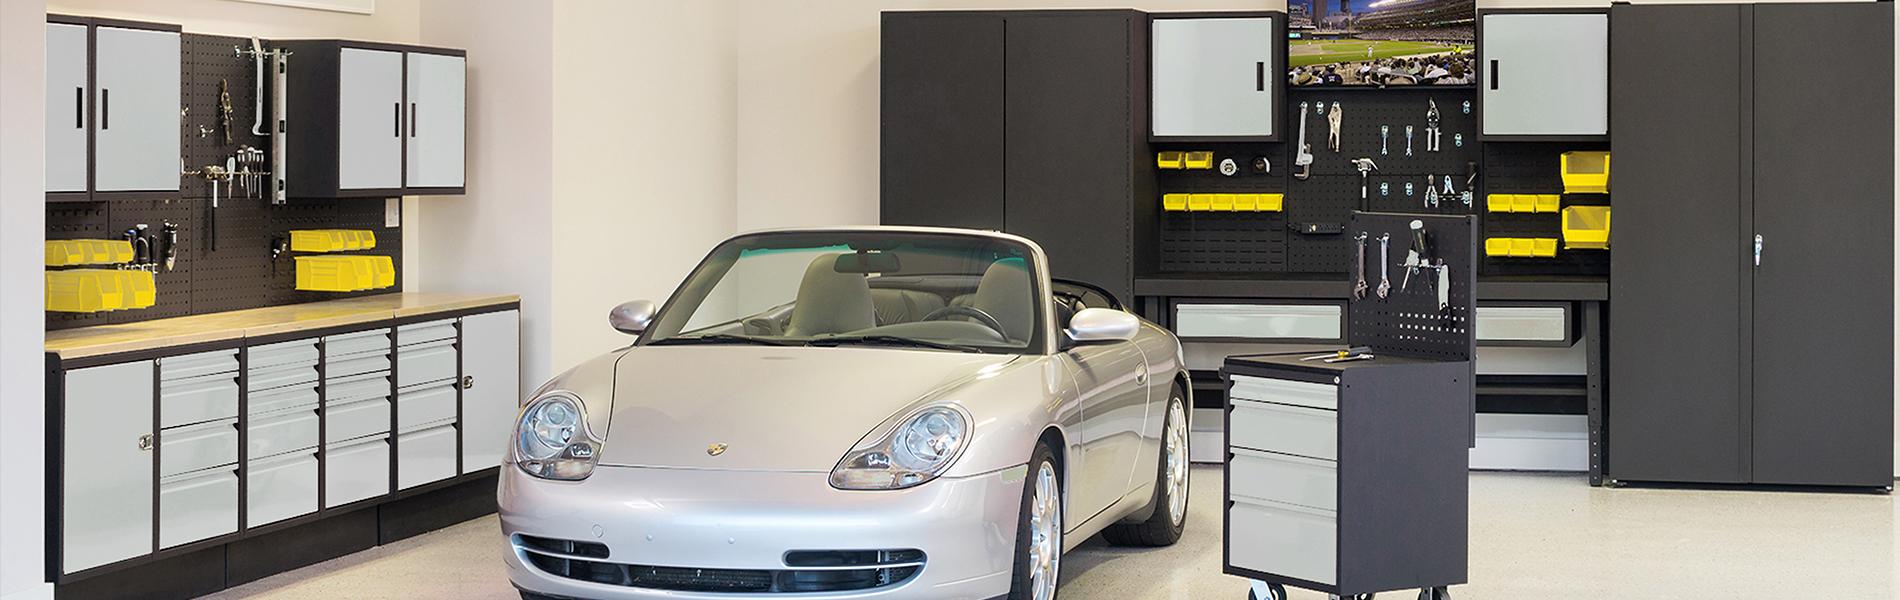 Collectors Edition Garage gray cabinets with gray Porsche